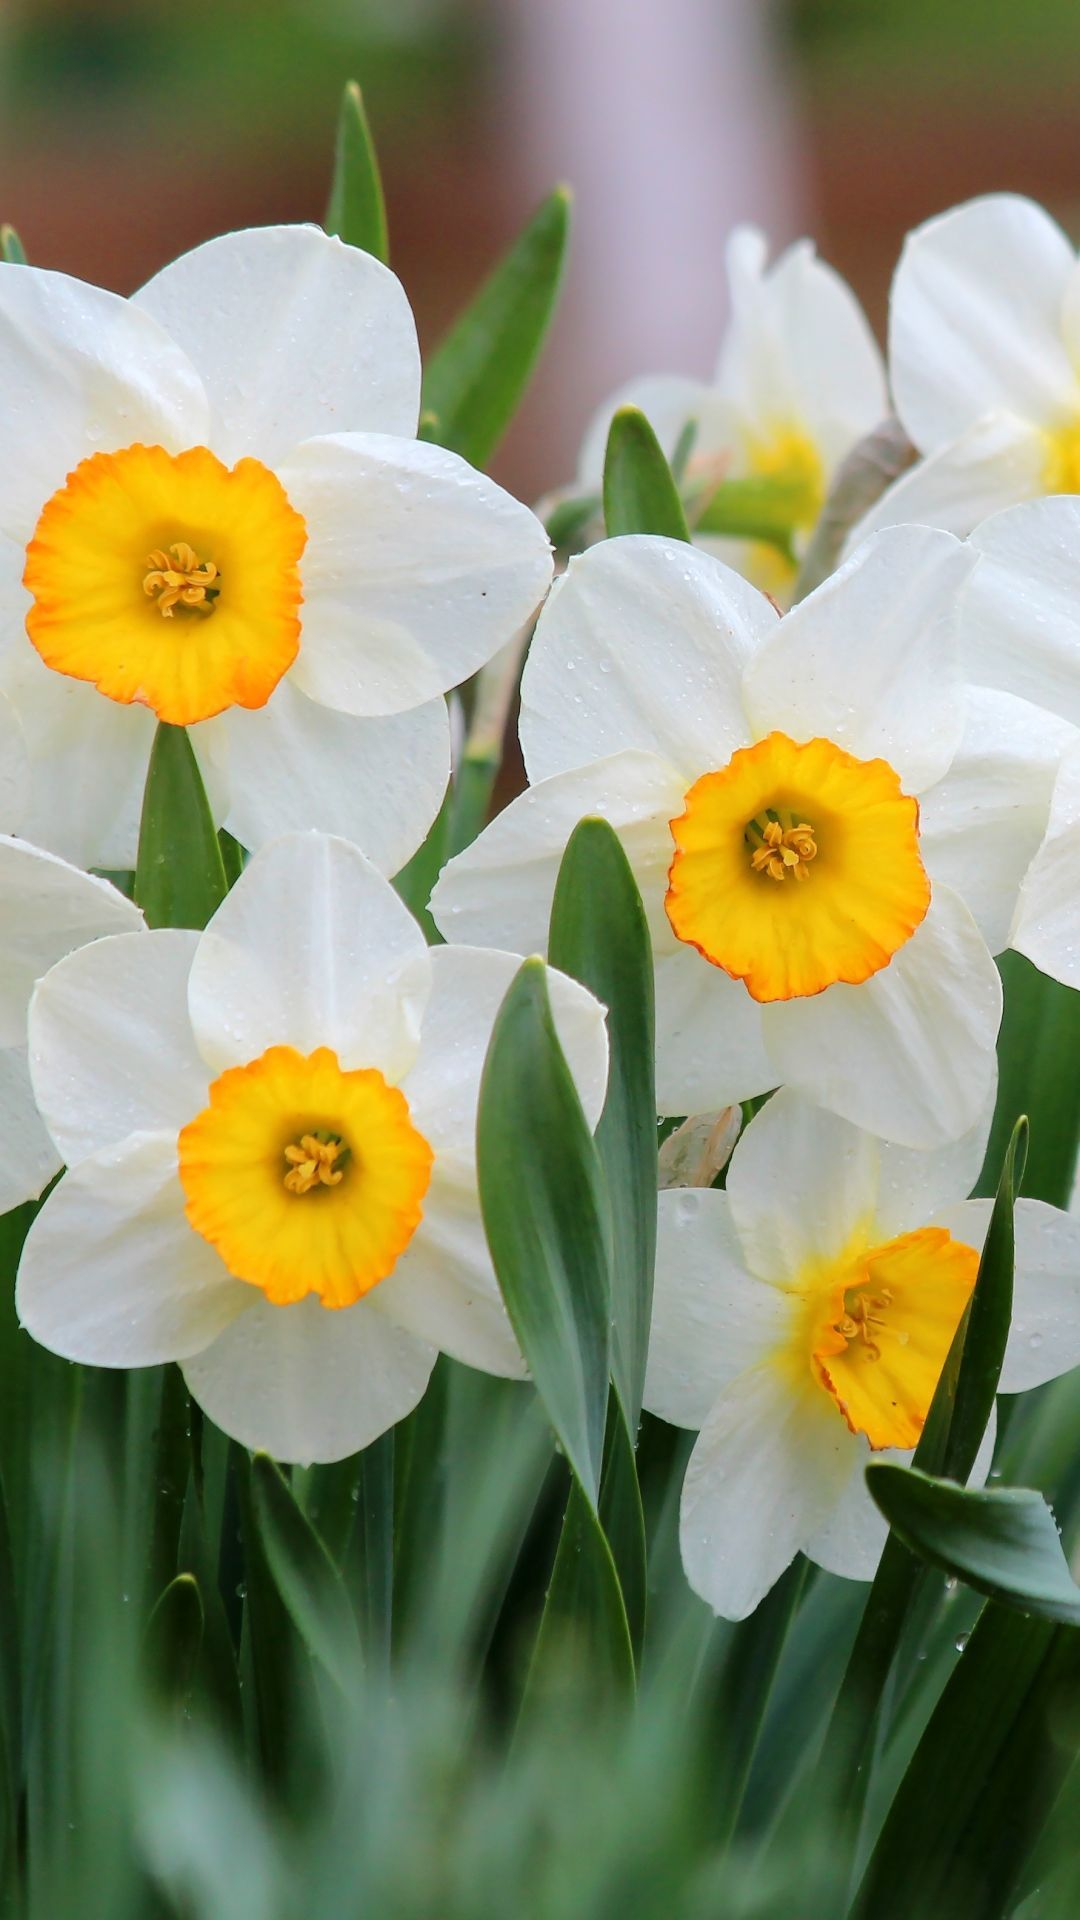 Earth / Daffodil (1080x1920) Mobile Wallpaper. Daffodils, Bulb flowers, Beautiful flowers